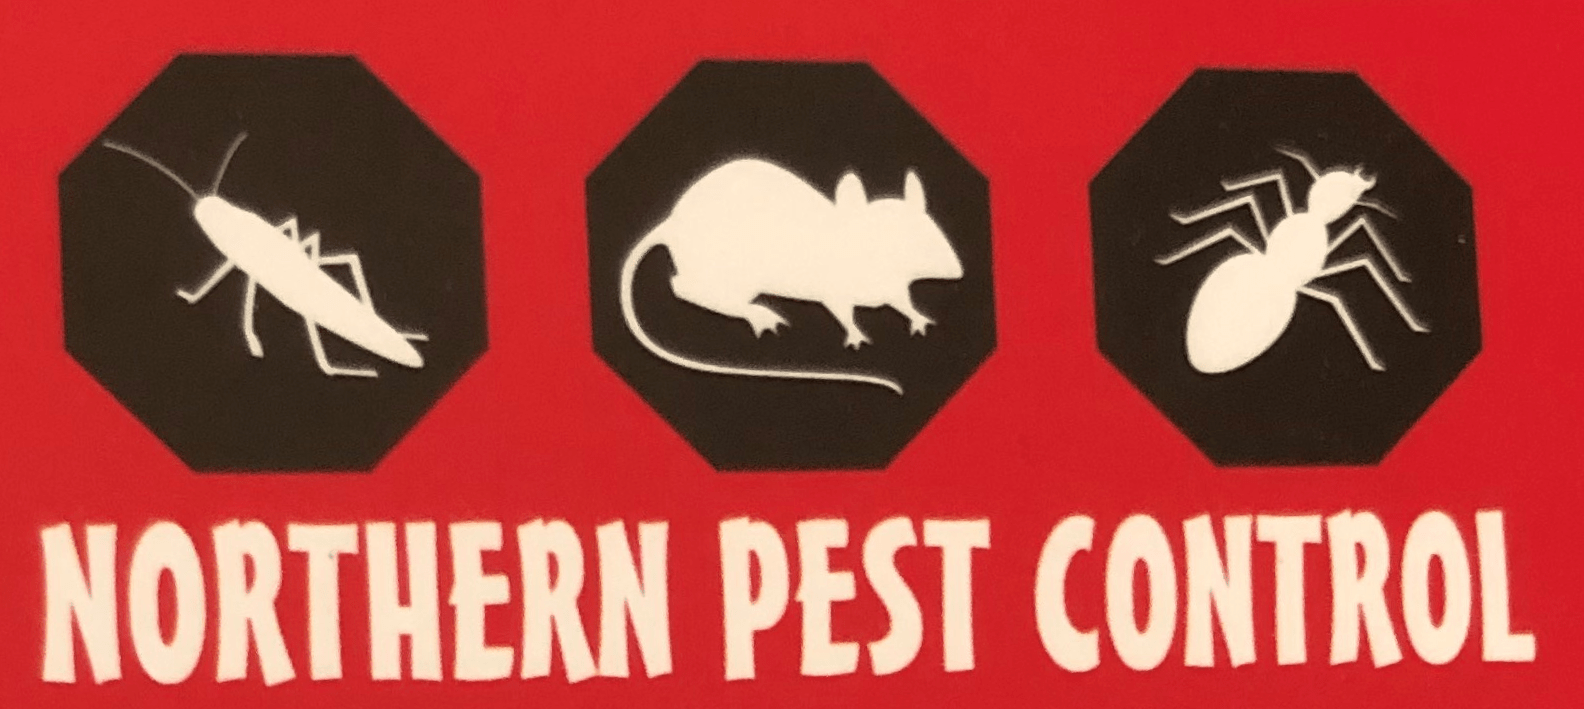 Northern Pest Control logo